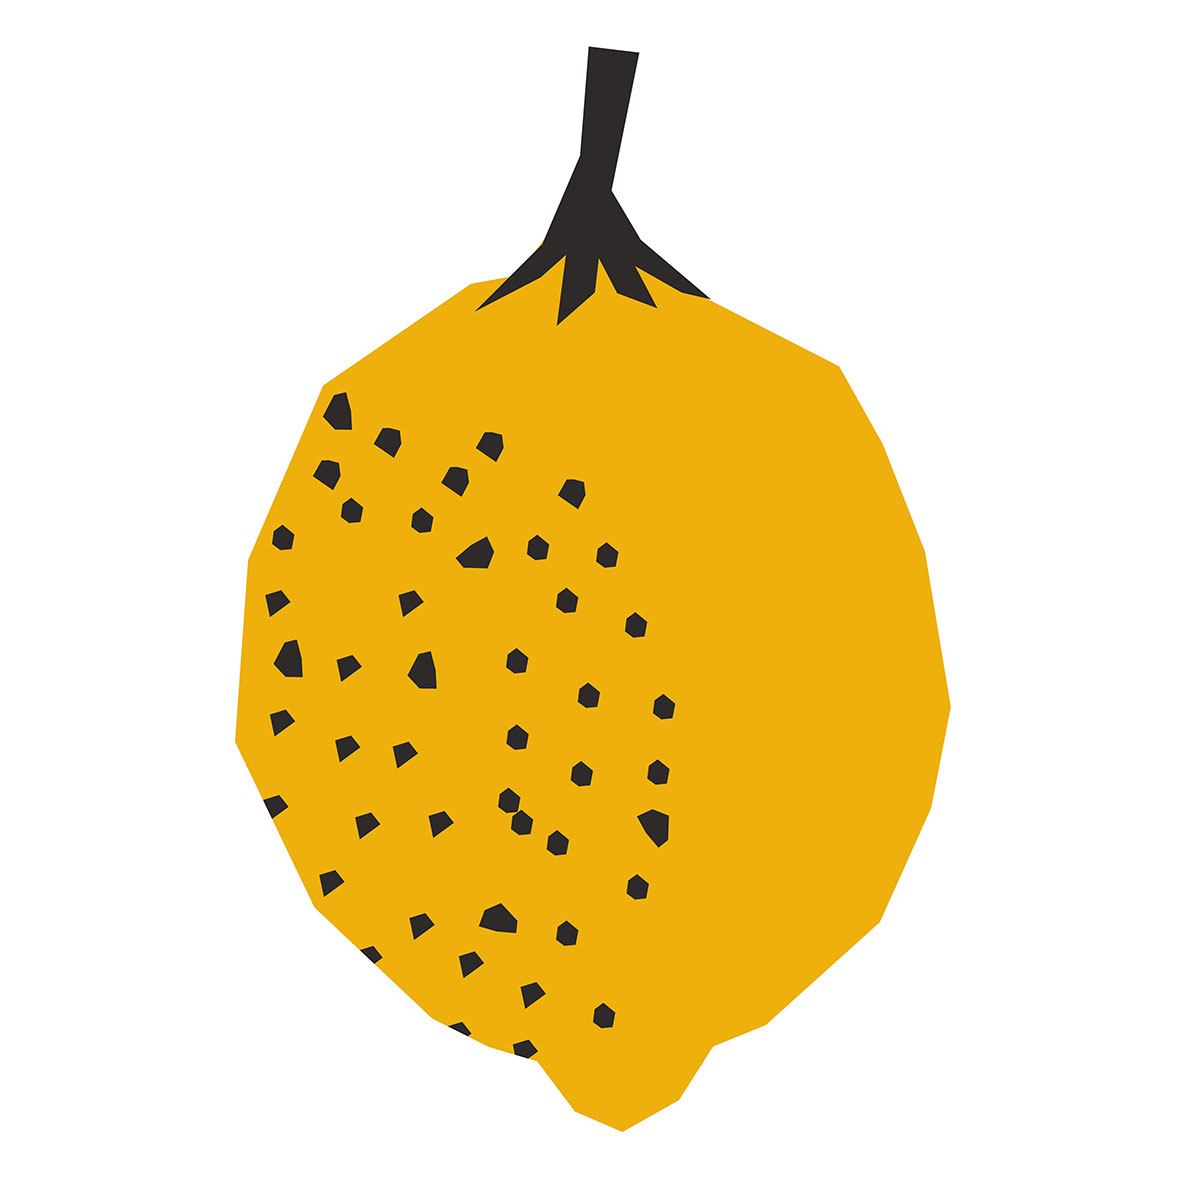 Lemon illustration rendition image